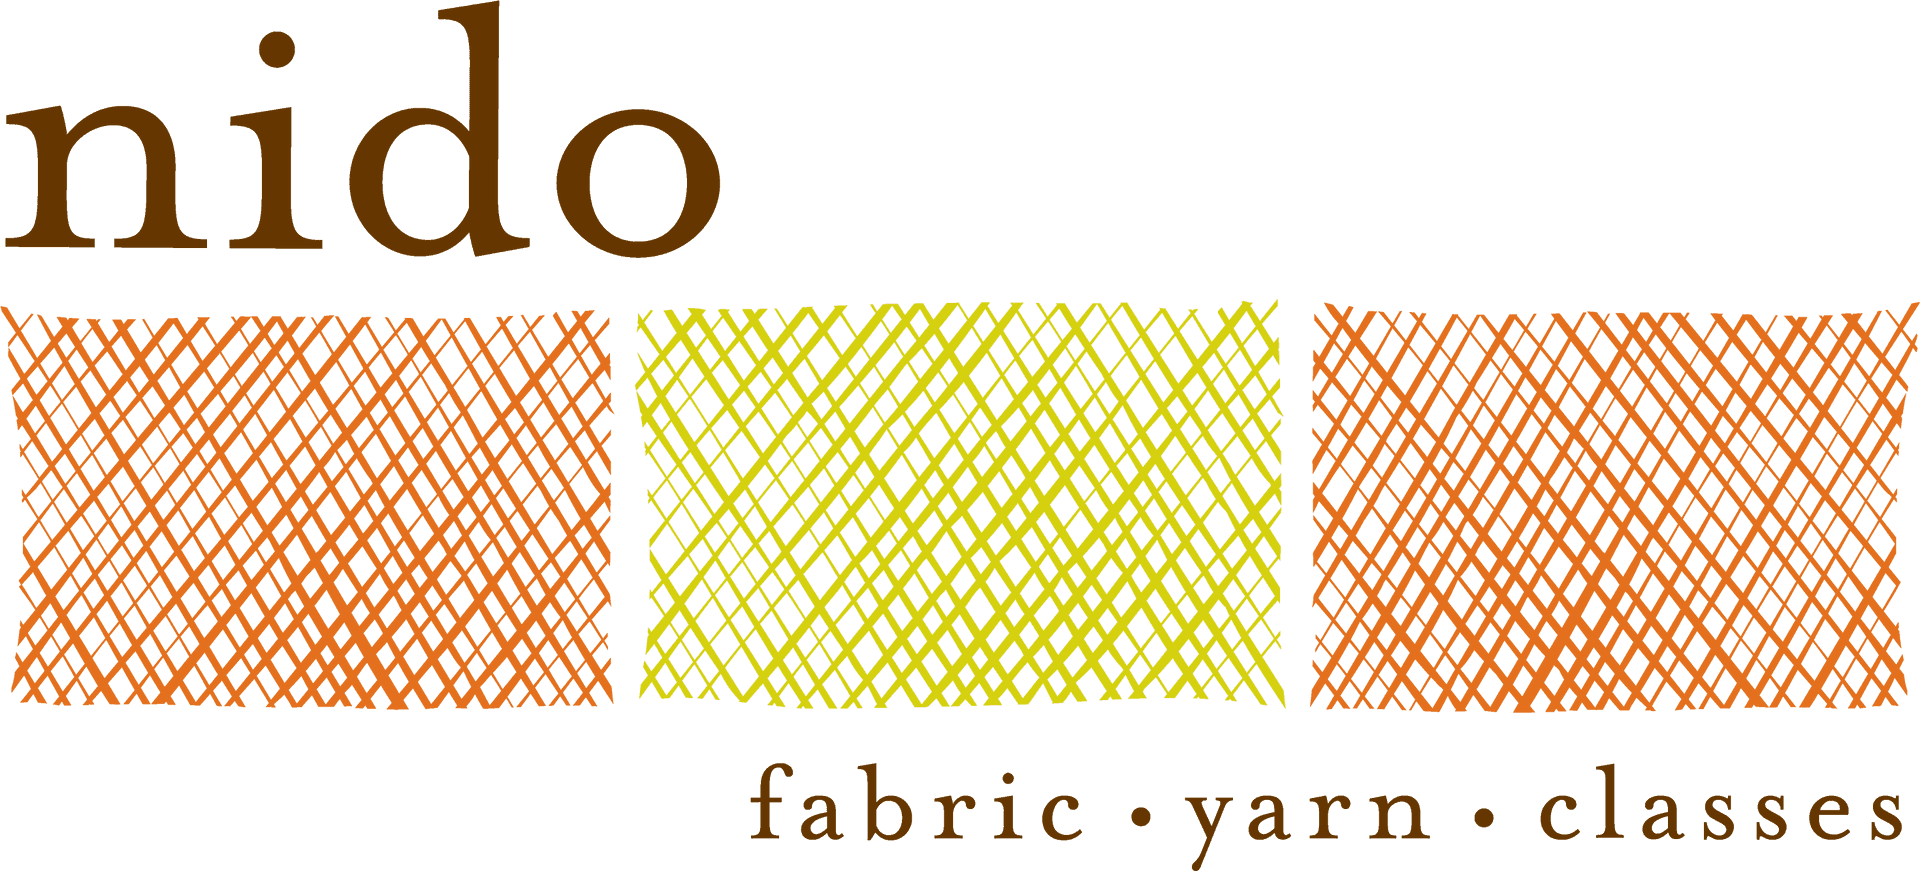 Nido Fabric Yarn Classes Logo PNG